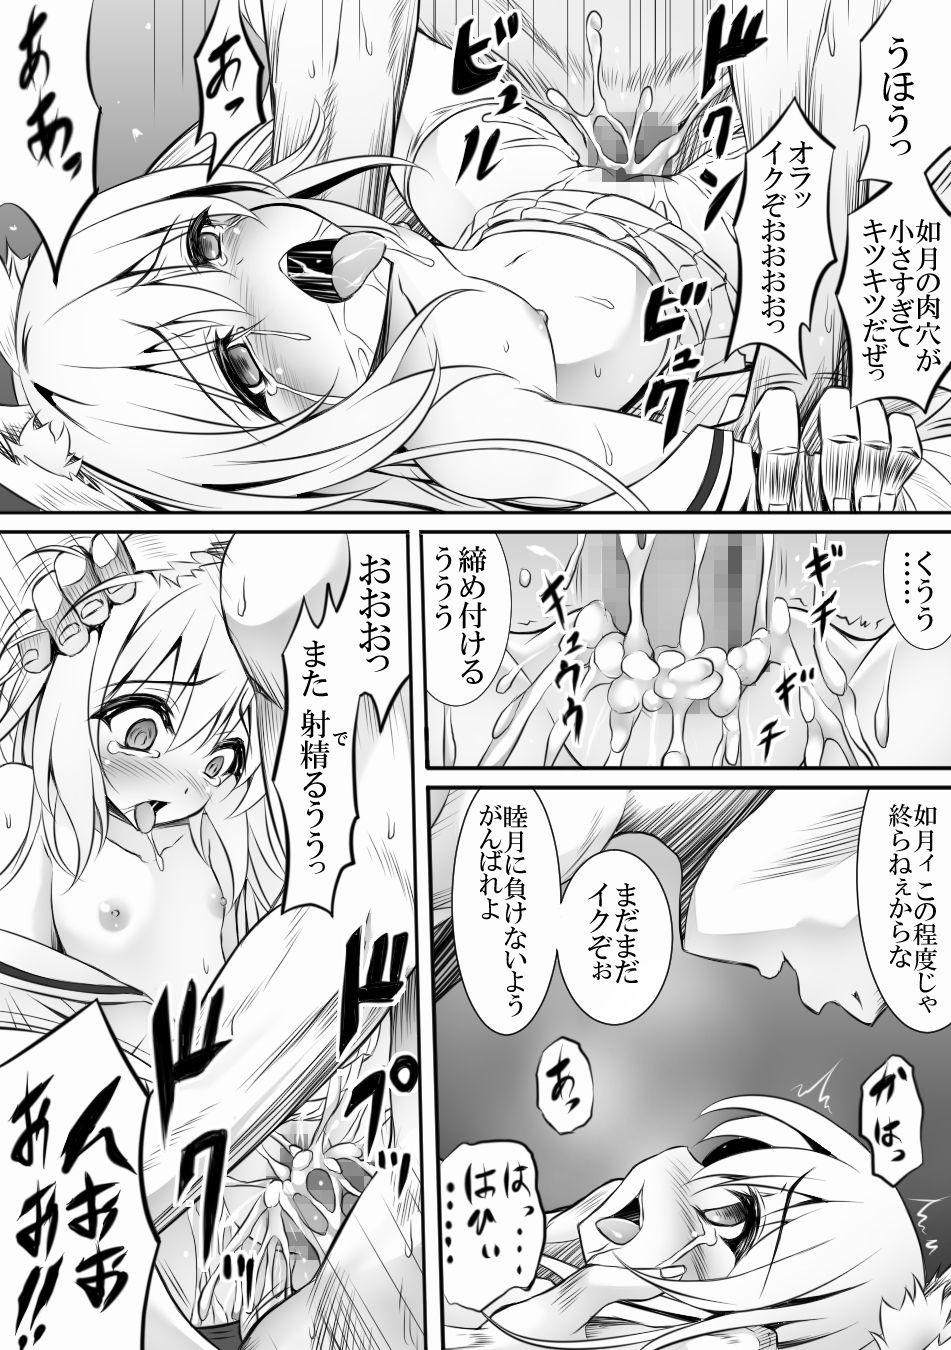 Woman AzuLan 1 Page Manga - Azur lane Big Tits - Picture 1